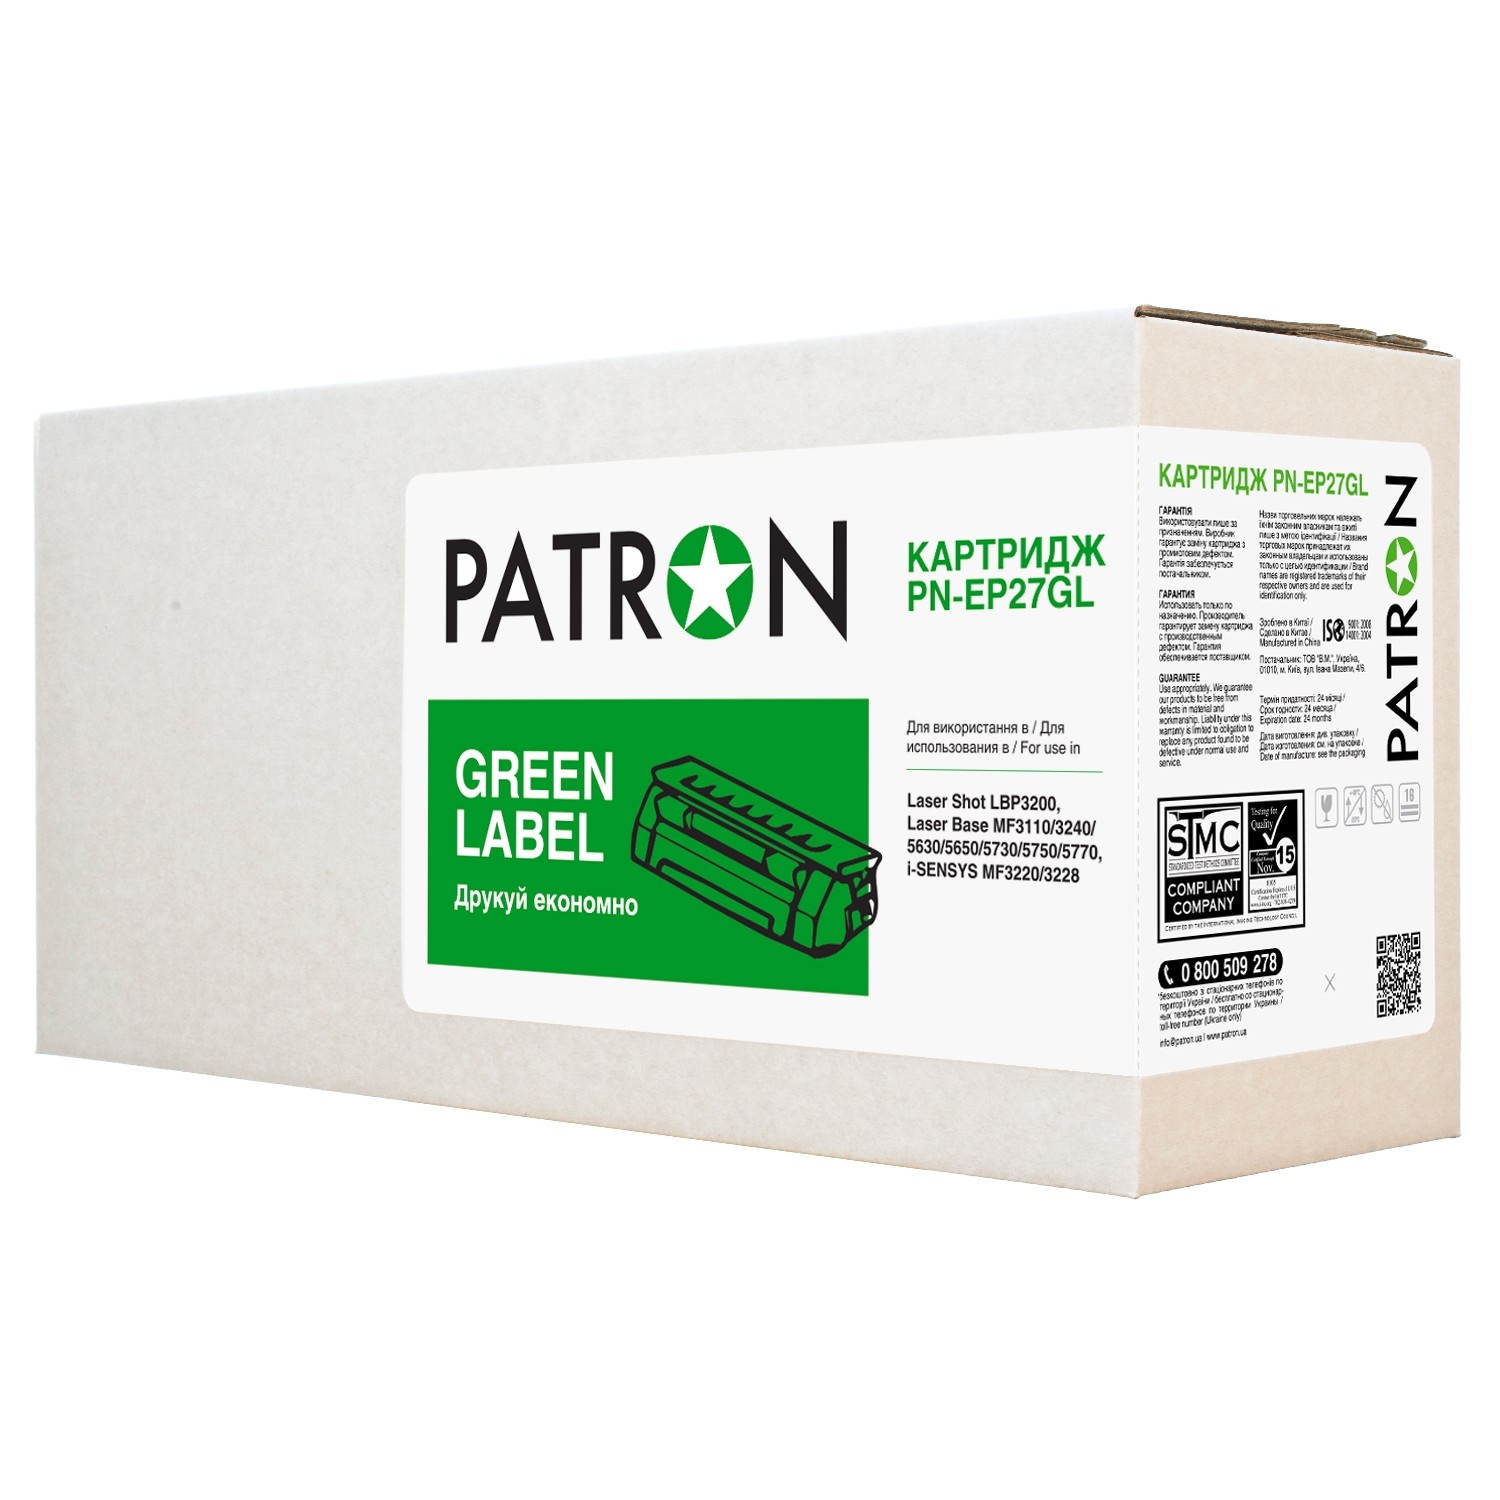 КАРТРИДЖ CANON EP-27 (PN-EP27GL) PATRON GREEN Label